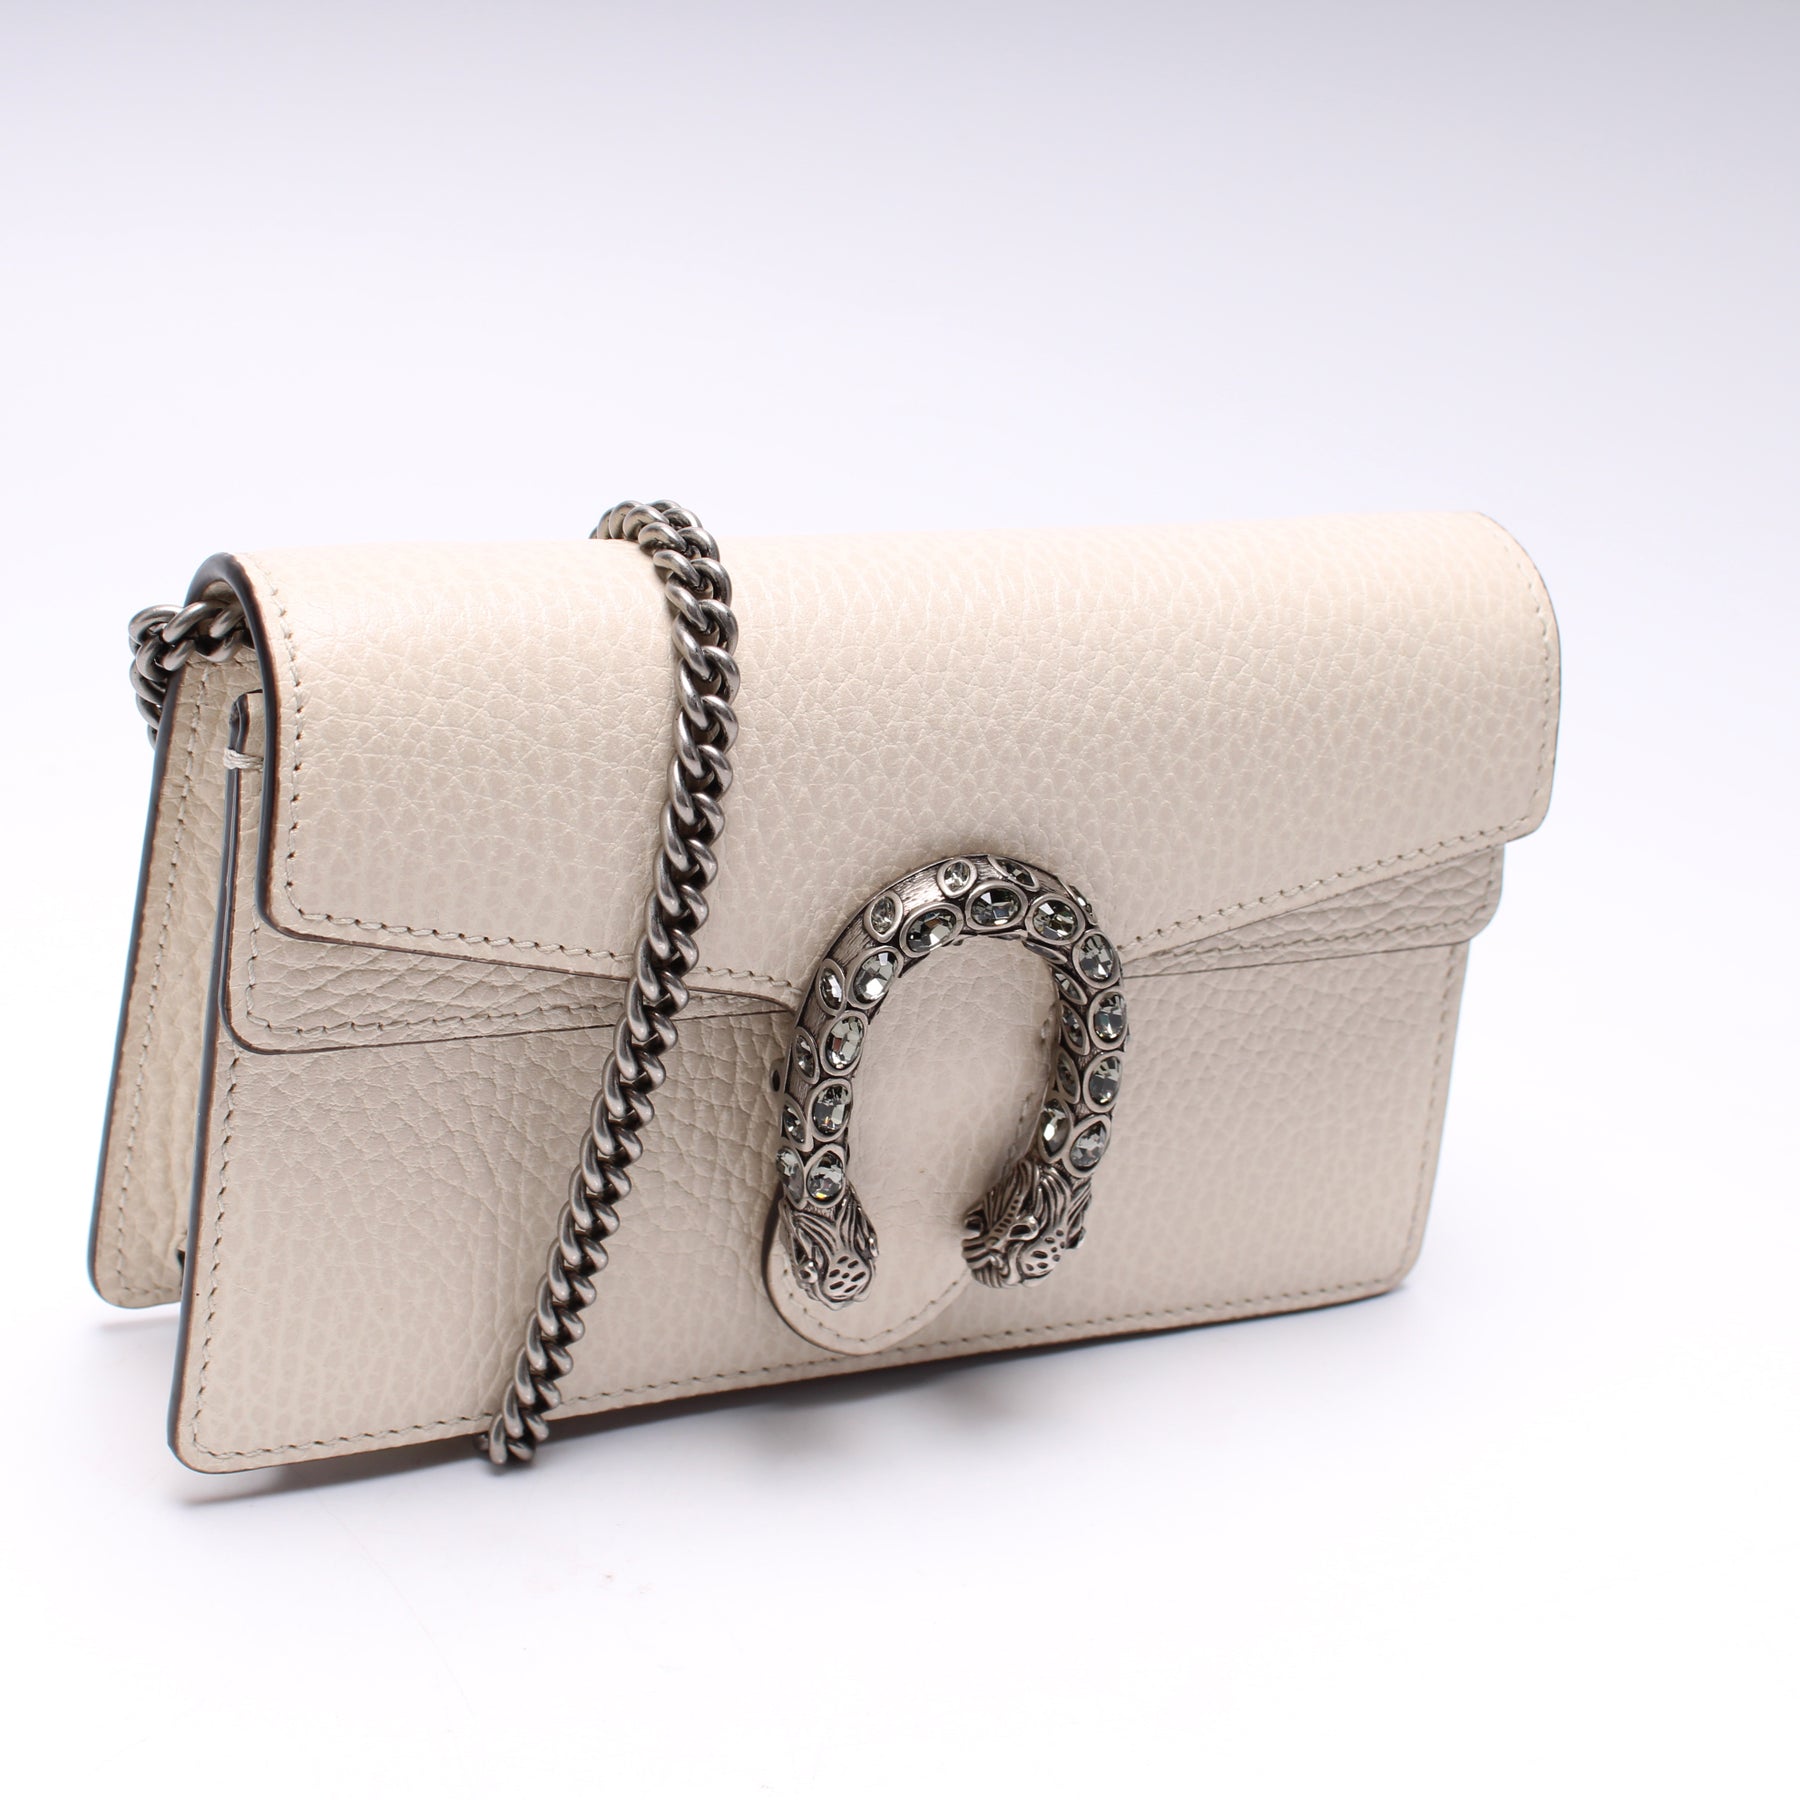 Gucci White Super Mini Leather Dionysus Bag for Women